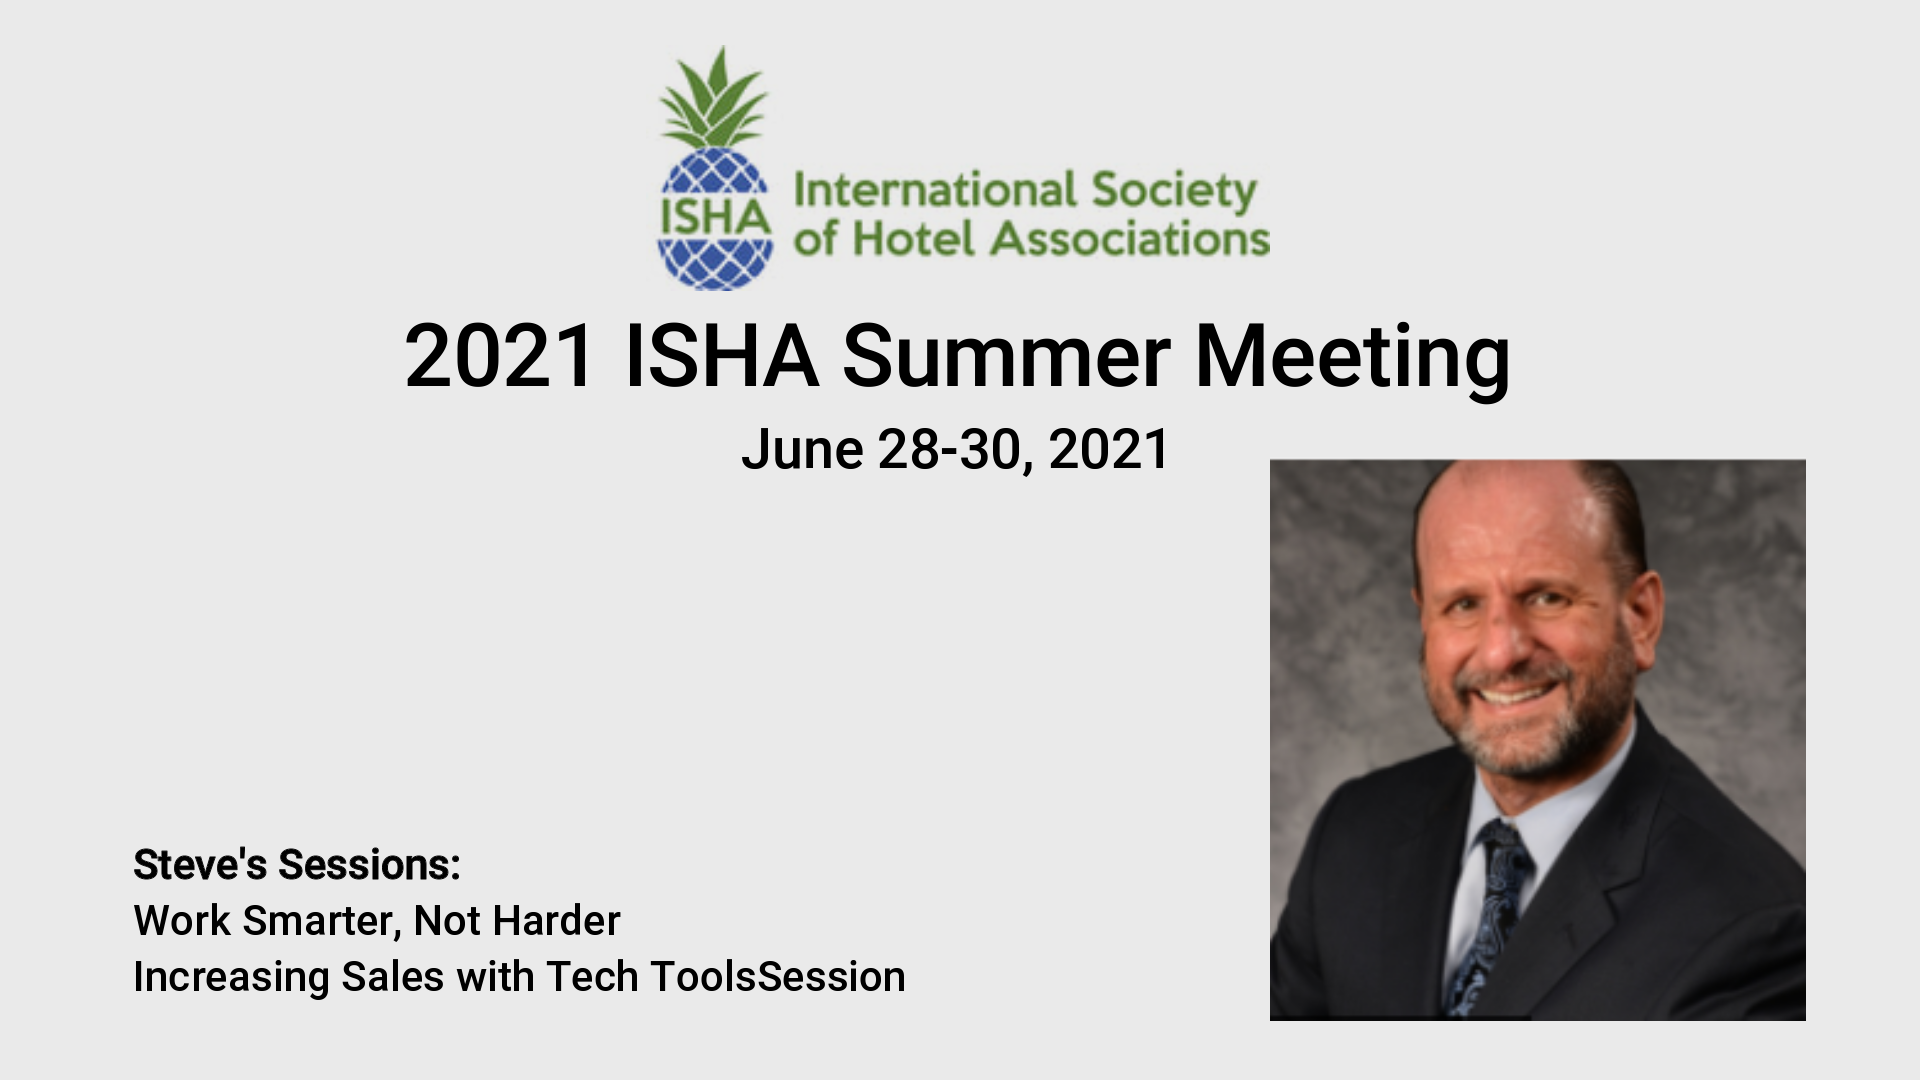 Steve Will Speak At The 2021 ISHA Summer Meeting